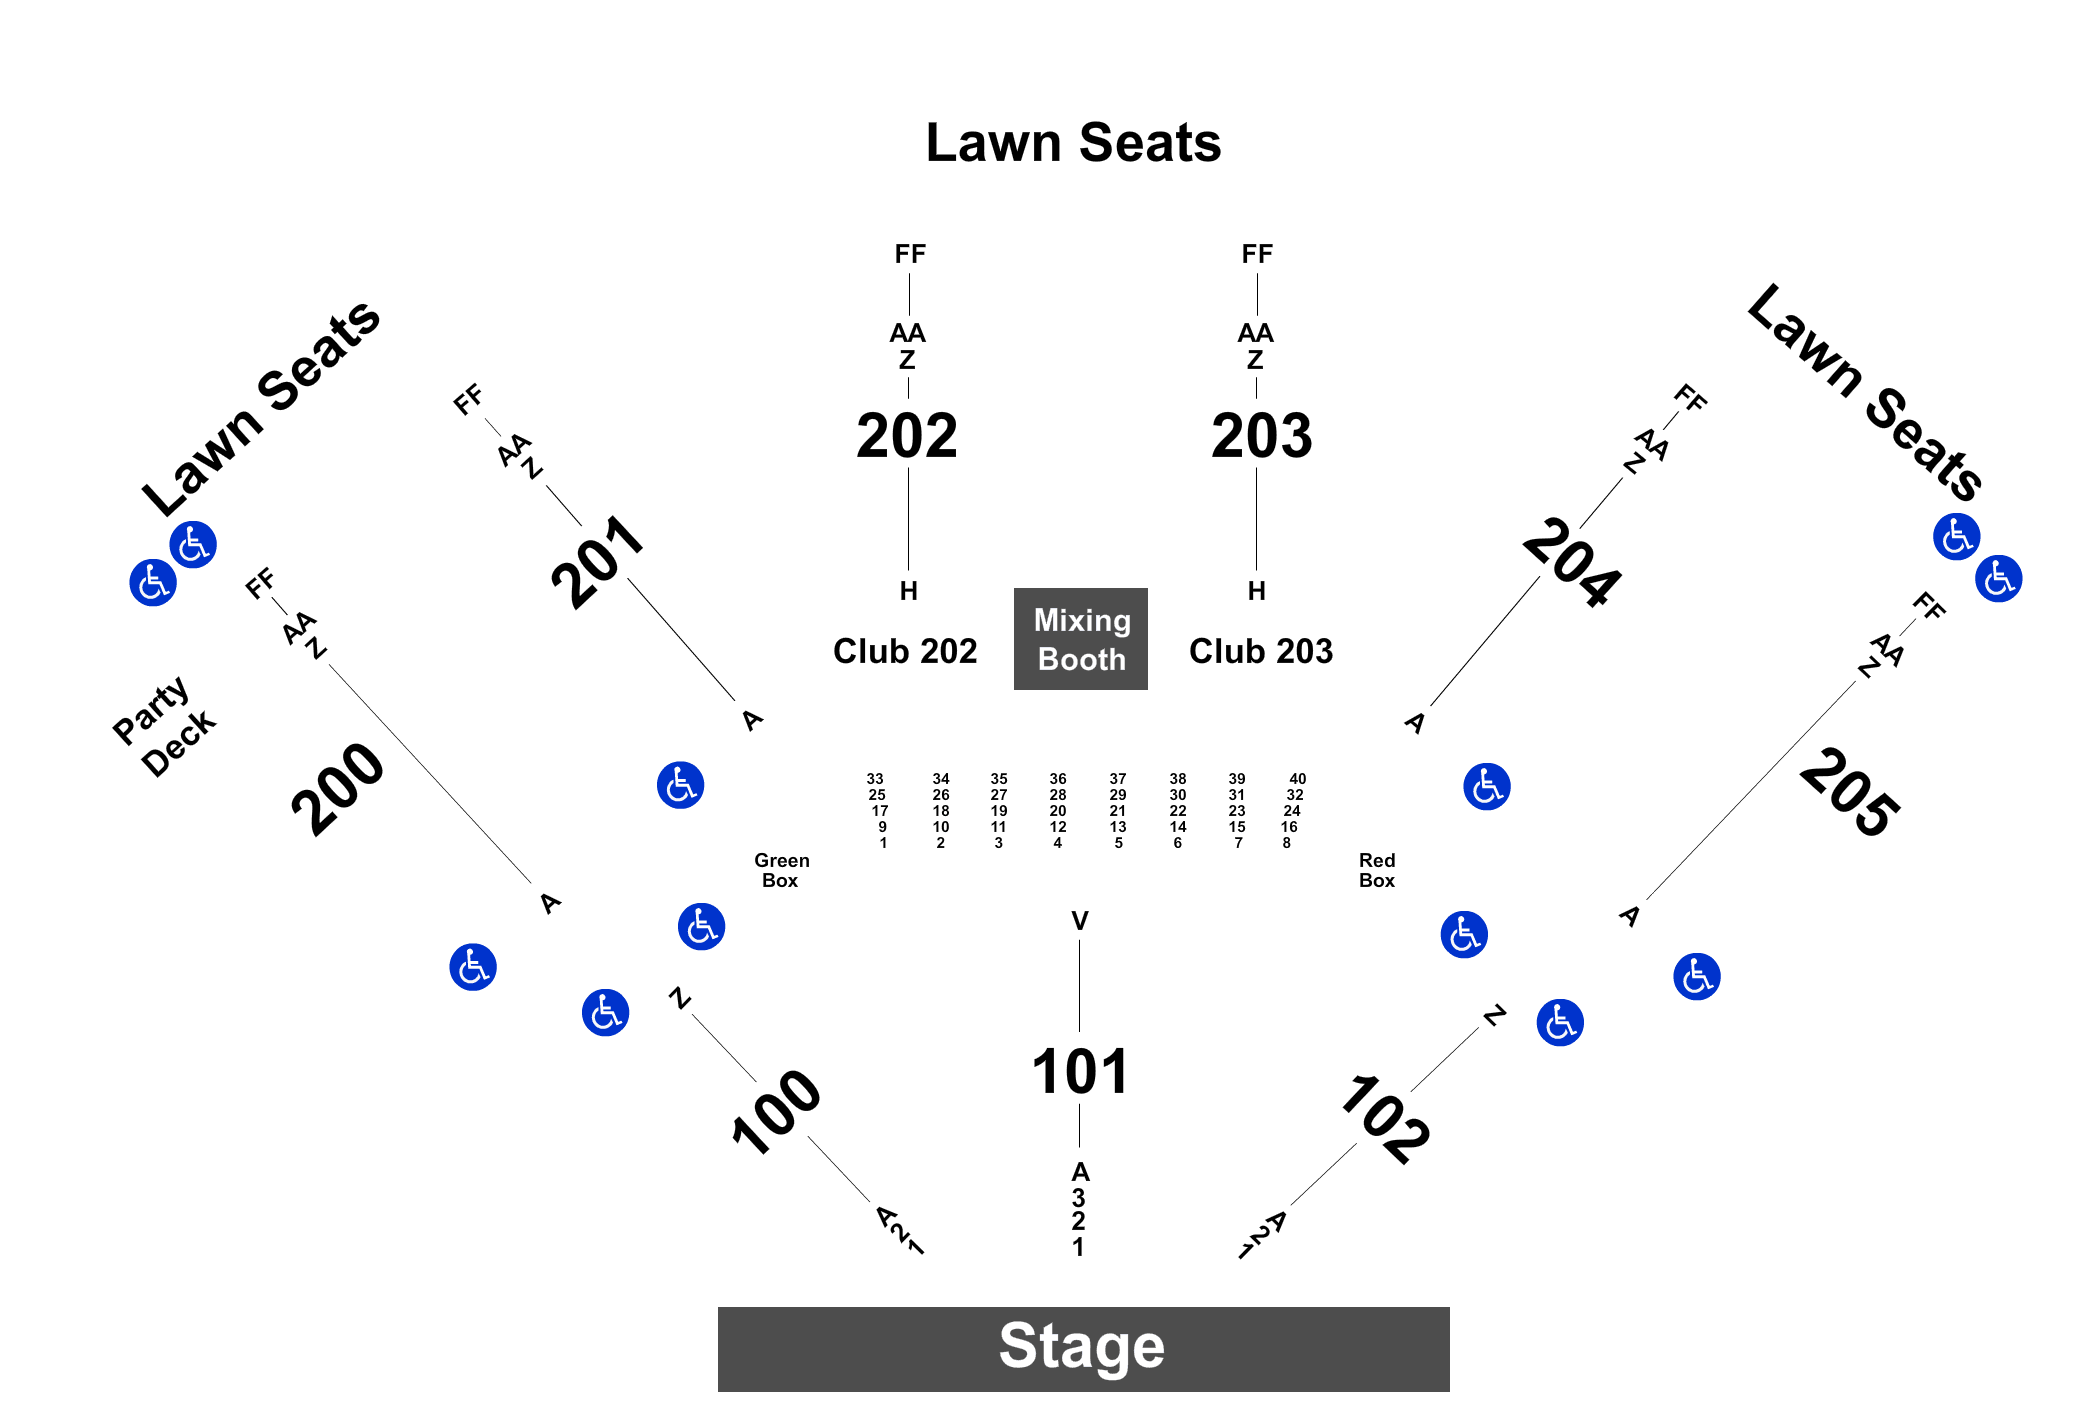 Gexa Energy Pavilion Detailed Seating Chart